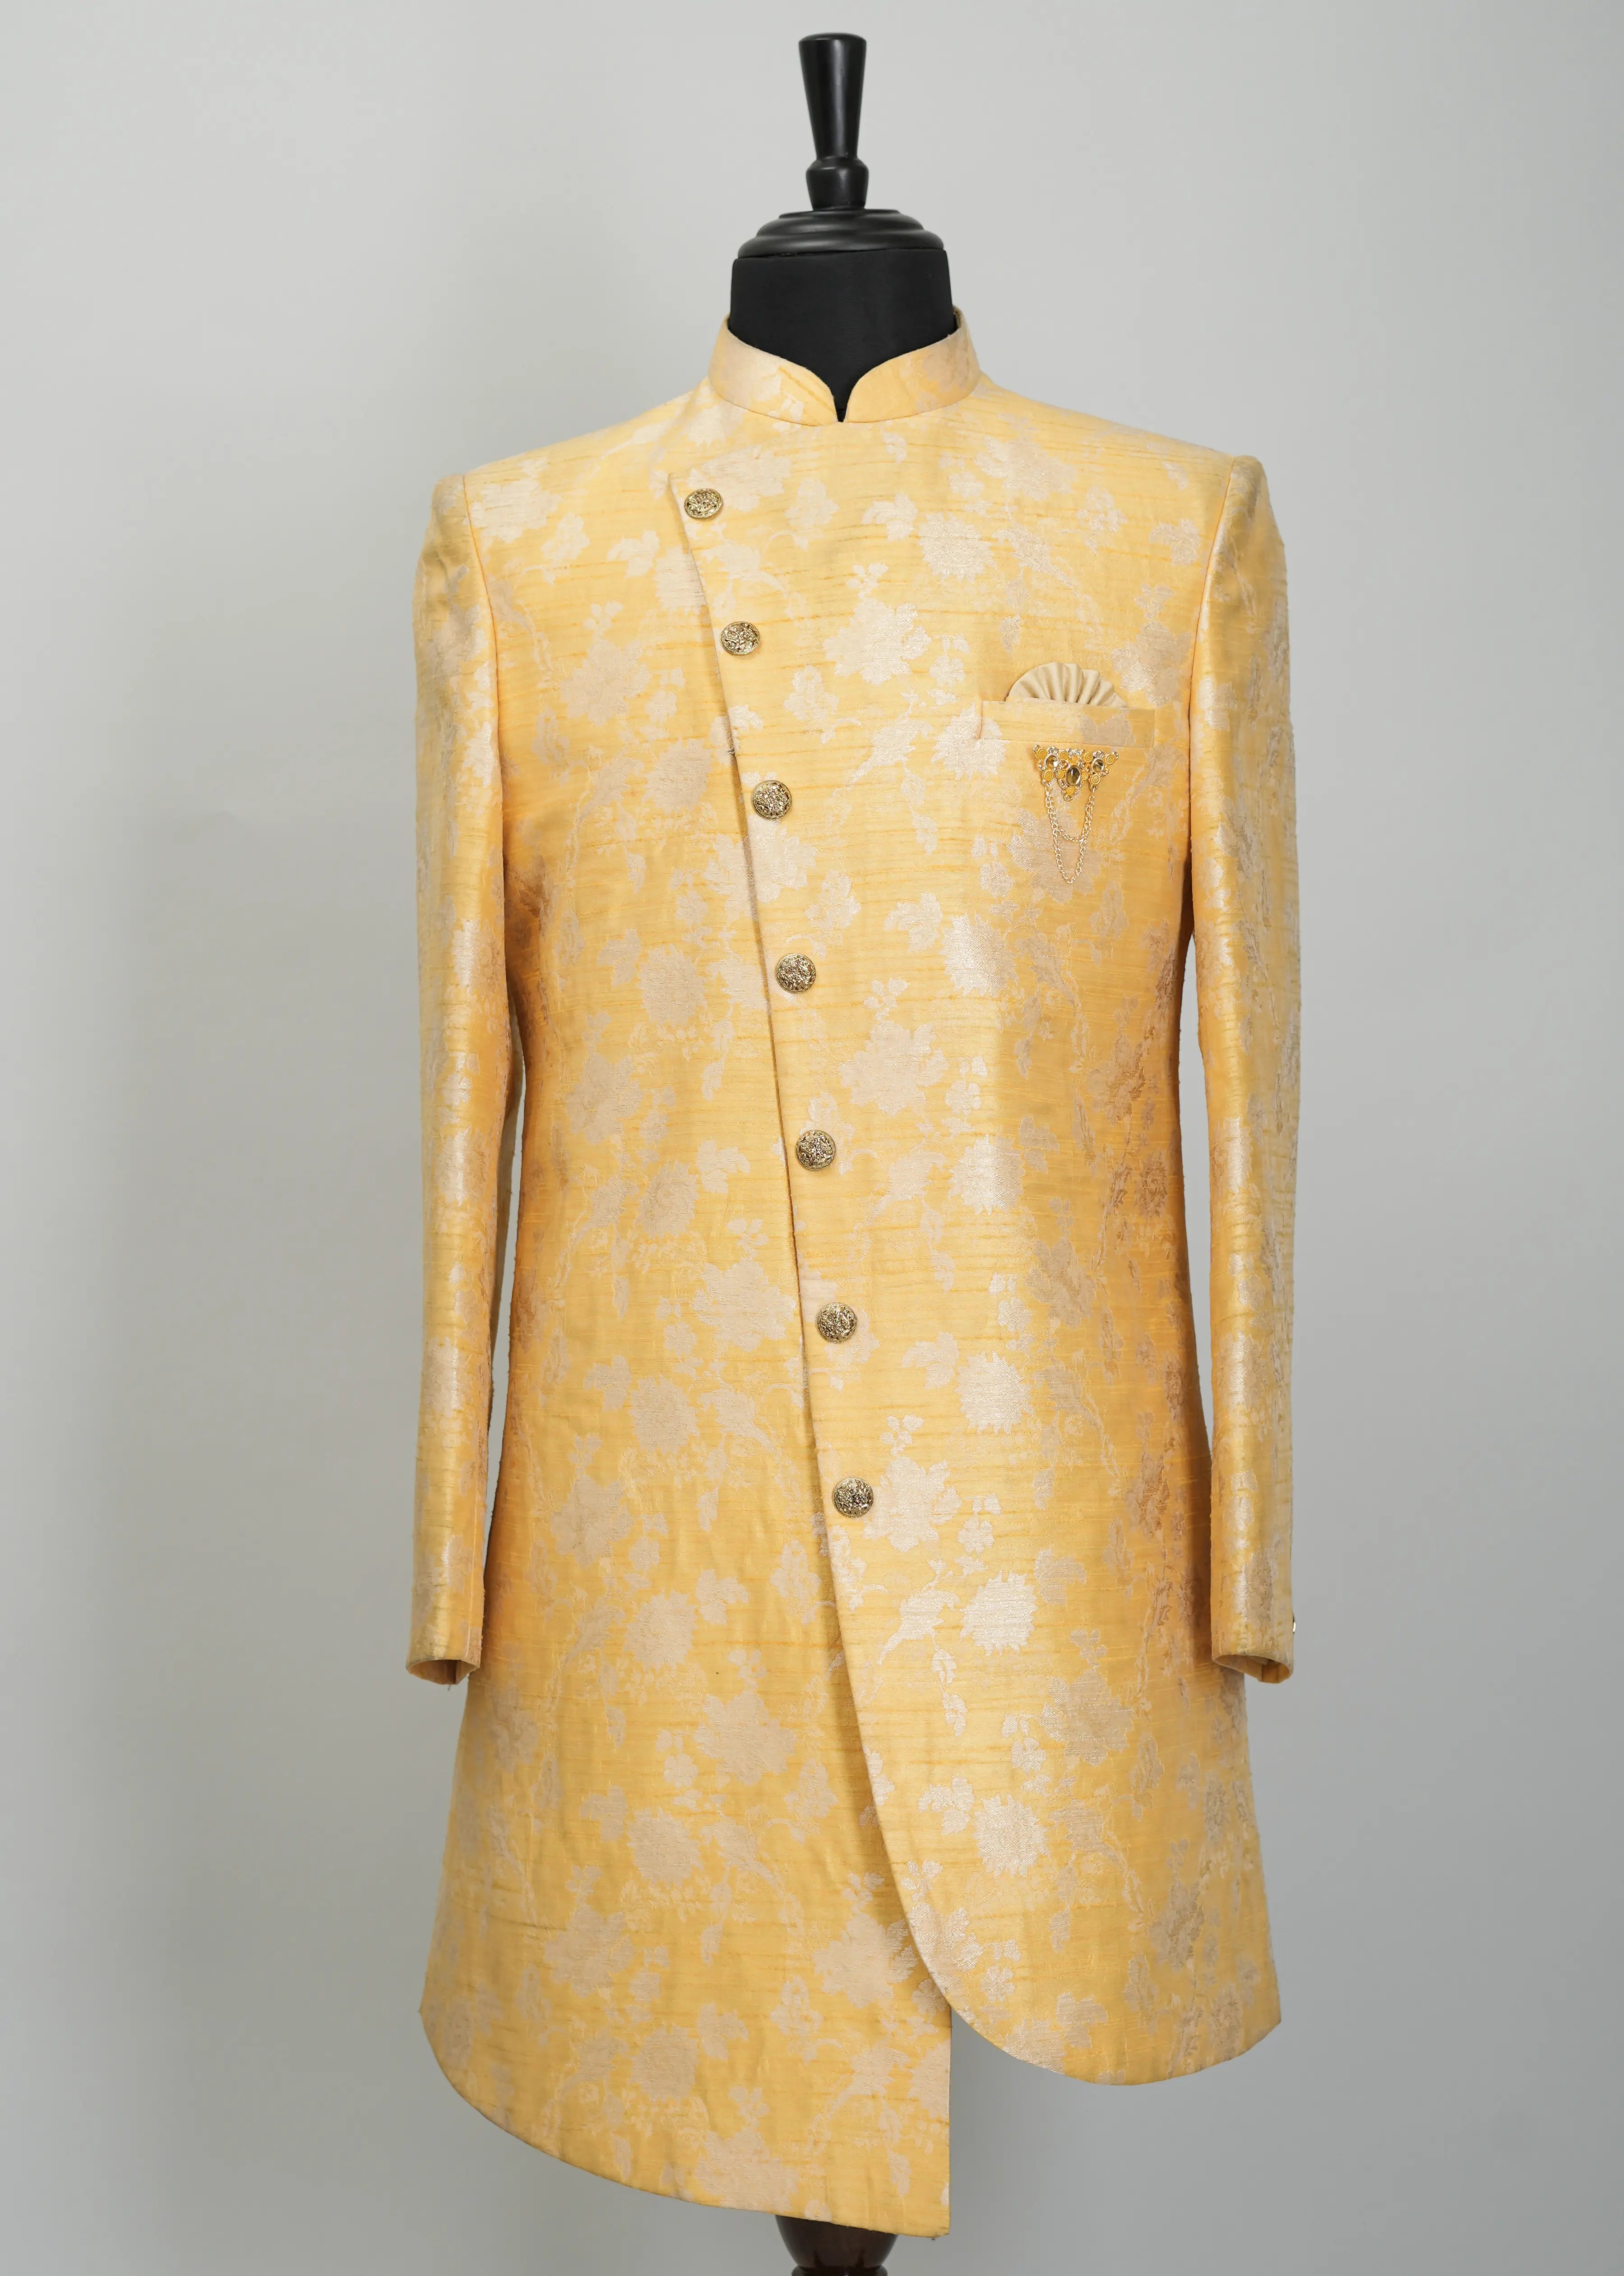 Metallic Gold Floral Indowestern Suit